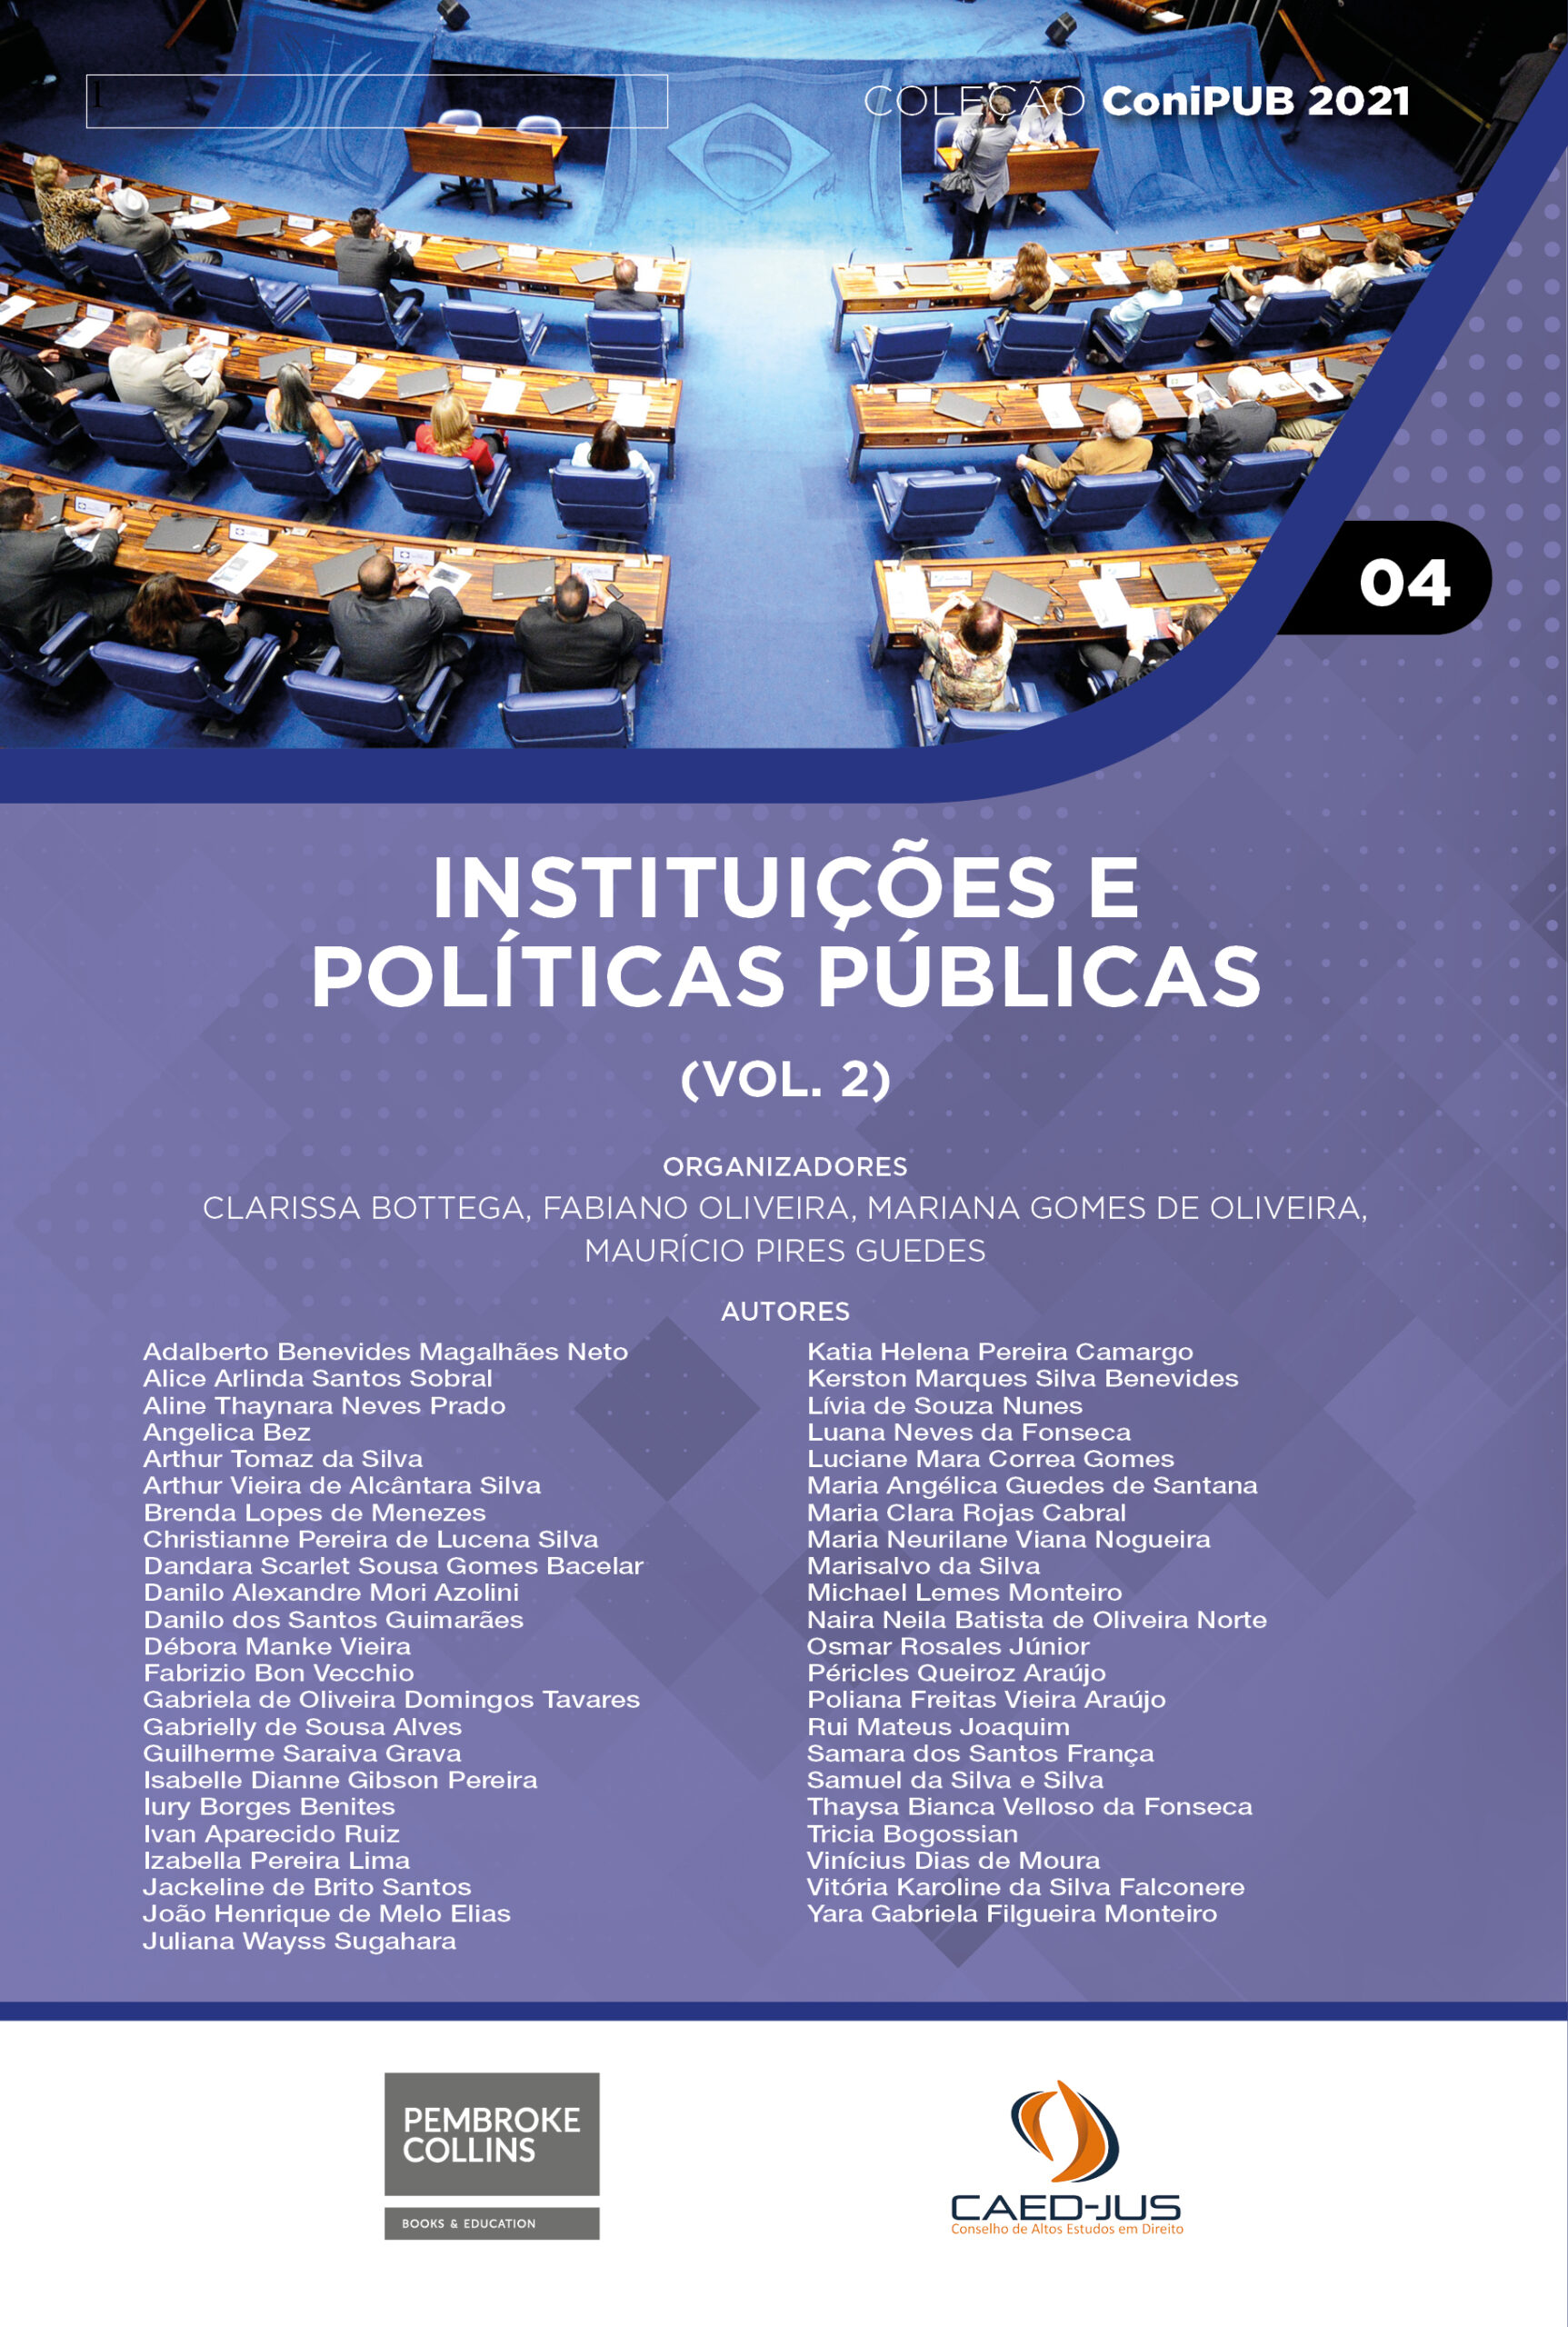 CONIPUB-2021-04-capa-Instituicoes-e-politicas-publicas-vol-2-Pembroke-Collins